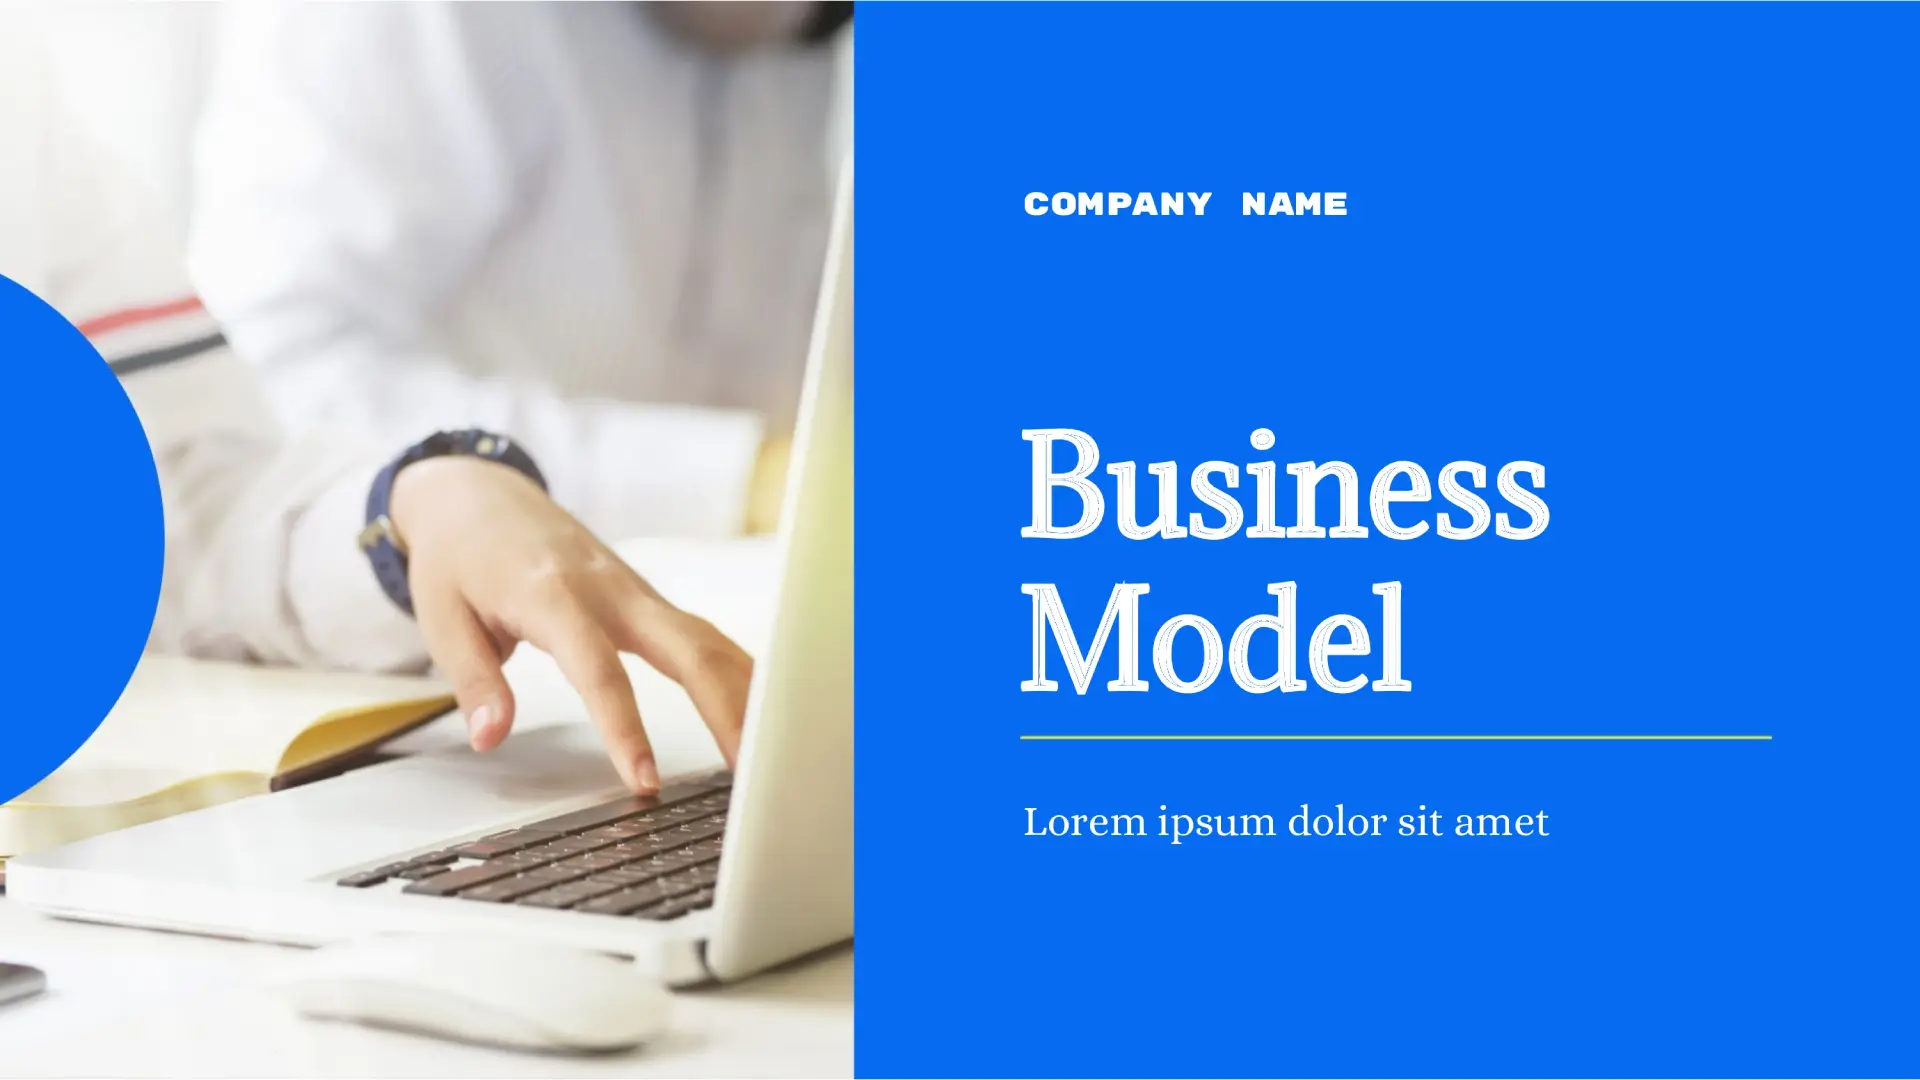 Business Model Template for Google Slides